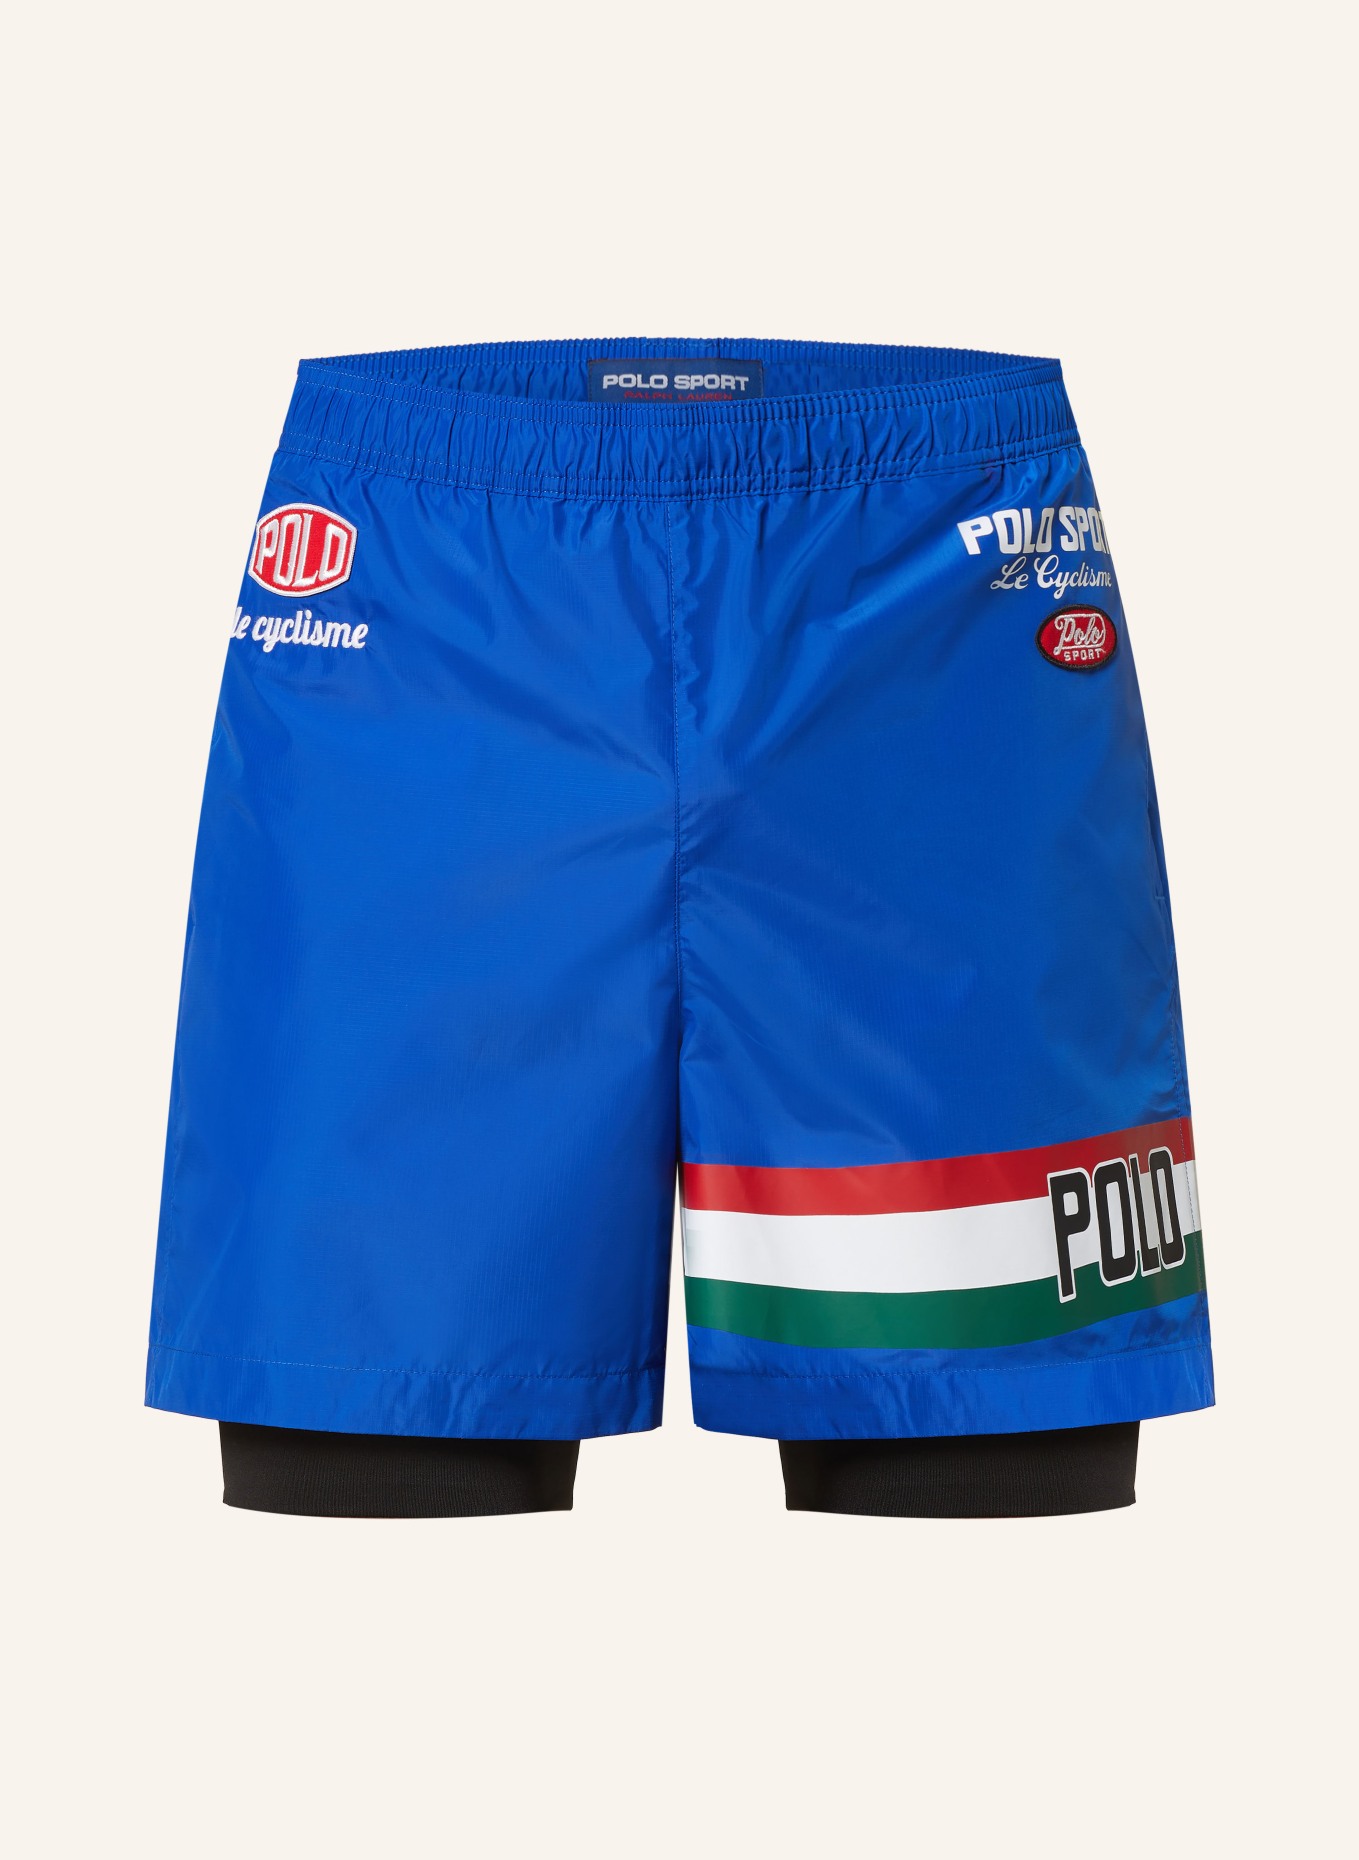 POLO SPORT 2-in-1-Shorts, Farbe: BLAU/ WEISS/ ROT (Bild 1)